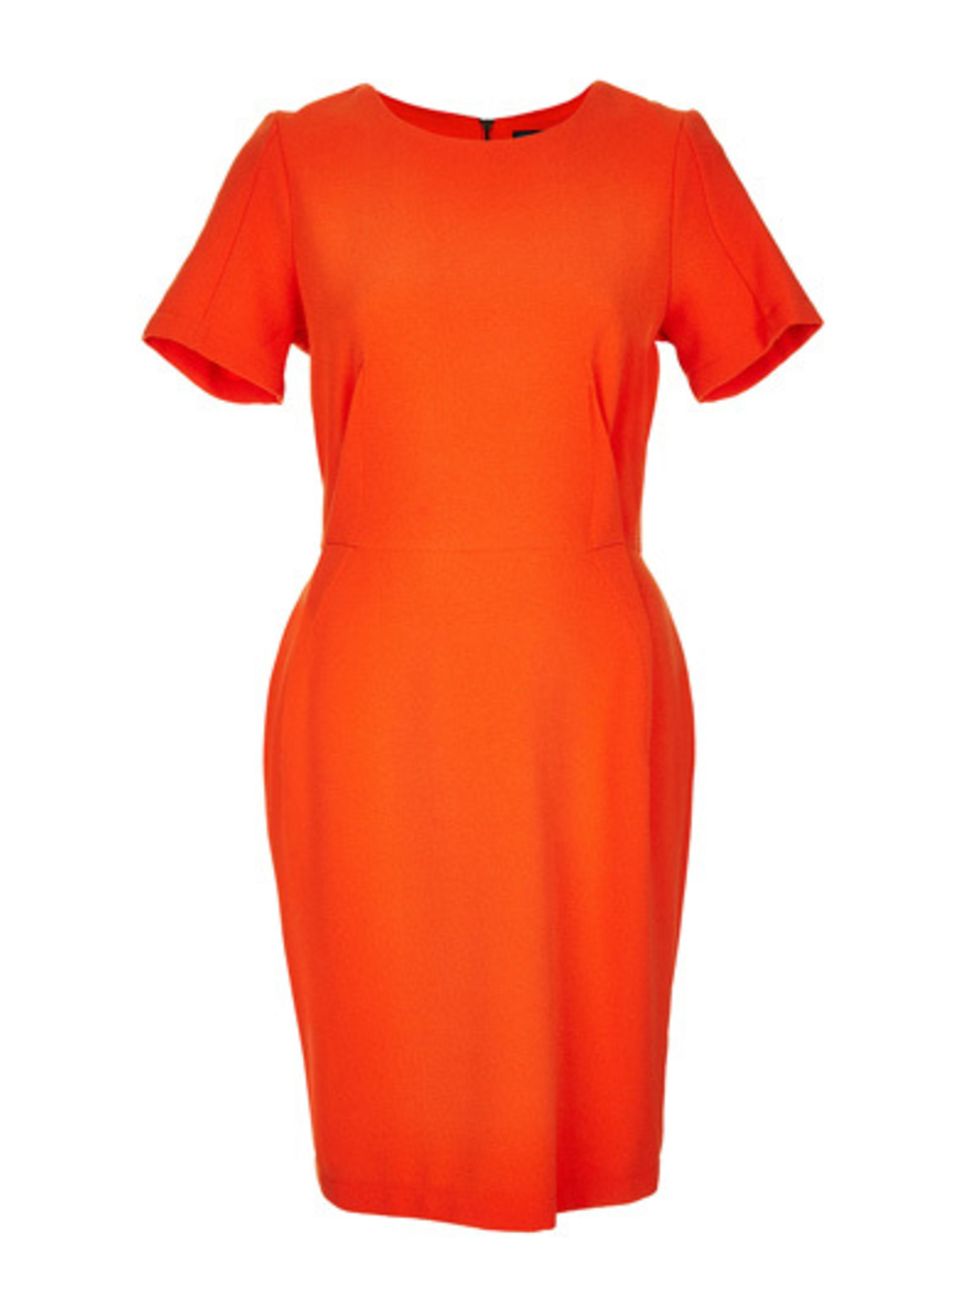 Sleeve, Dress, Orange, Red, Pattern, One-piece garment, Carmine, Peach, Day dress, Coquelicot, 